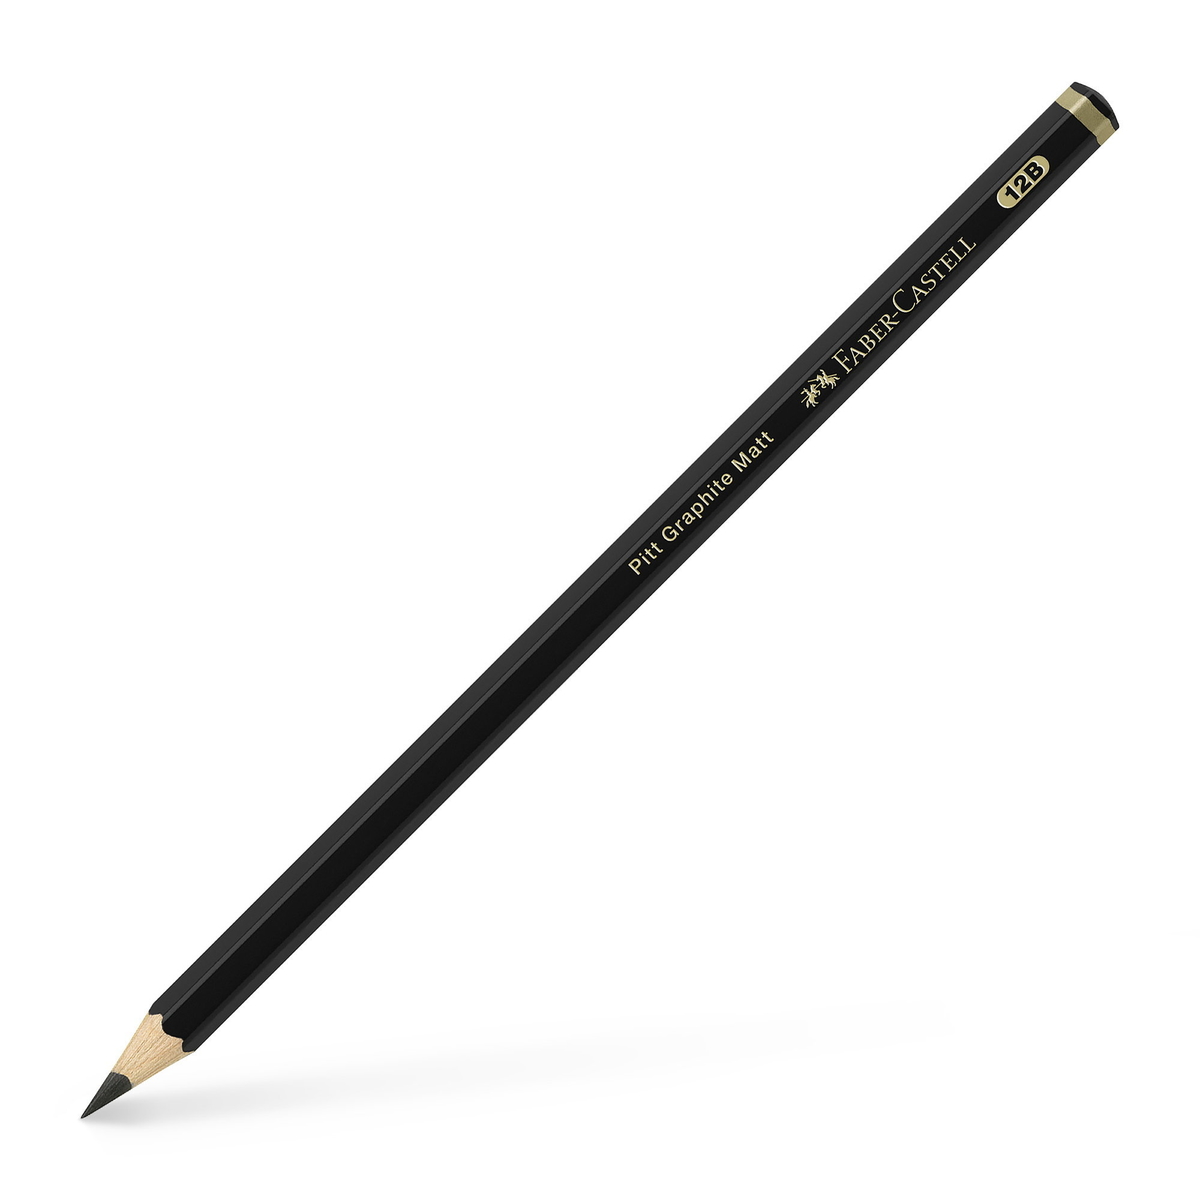 8 Pcs Faber-Castell Graphite Pitt Matt Pencil Set HB, 2B, 4B, 6B